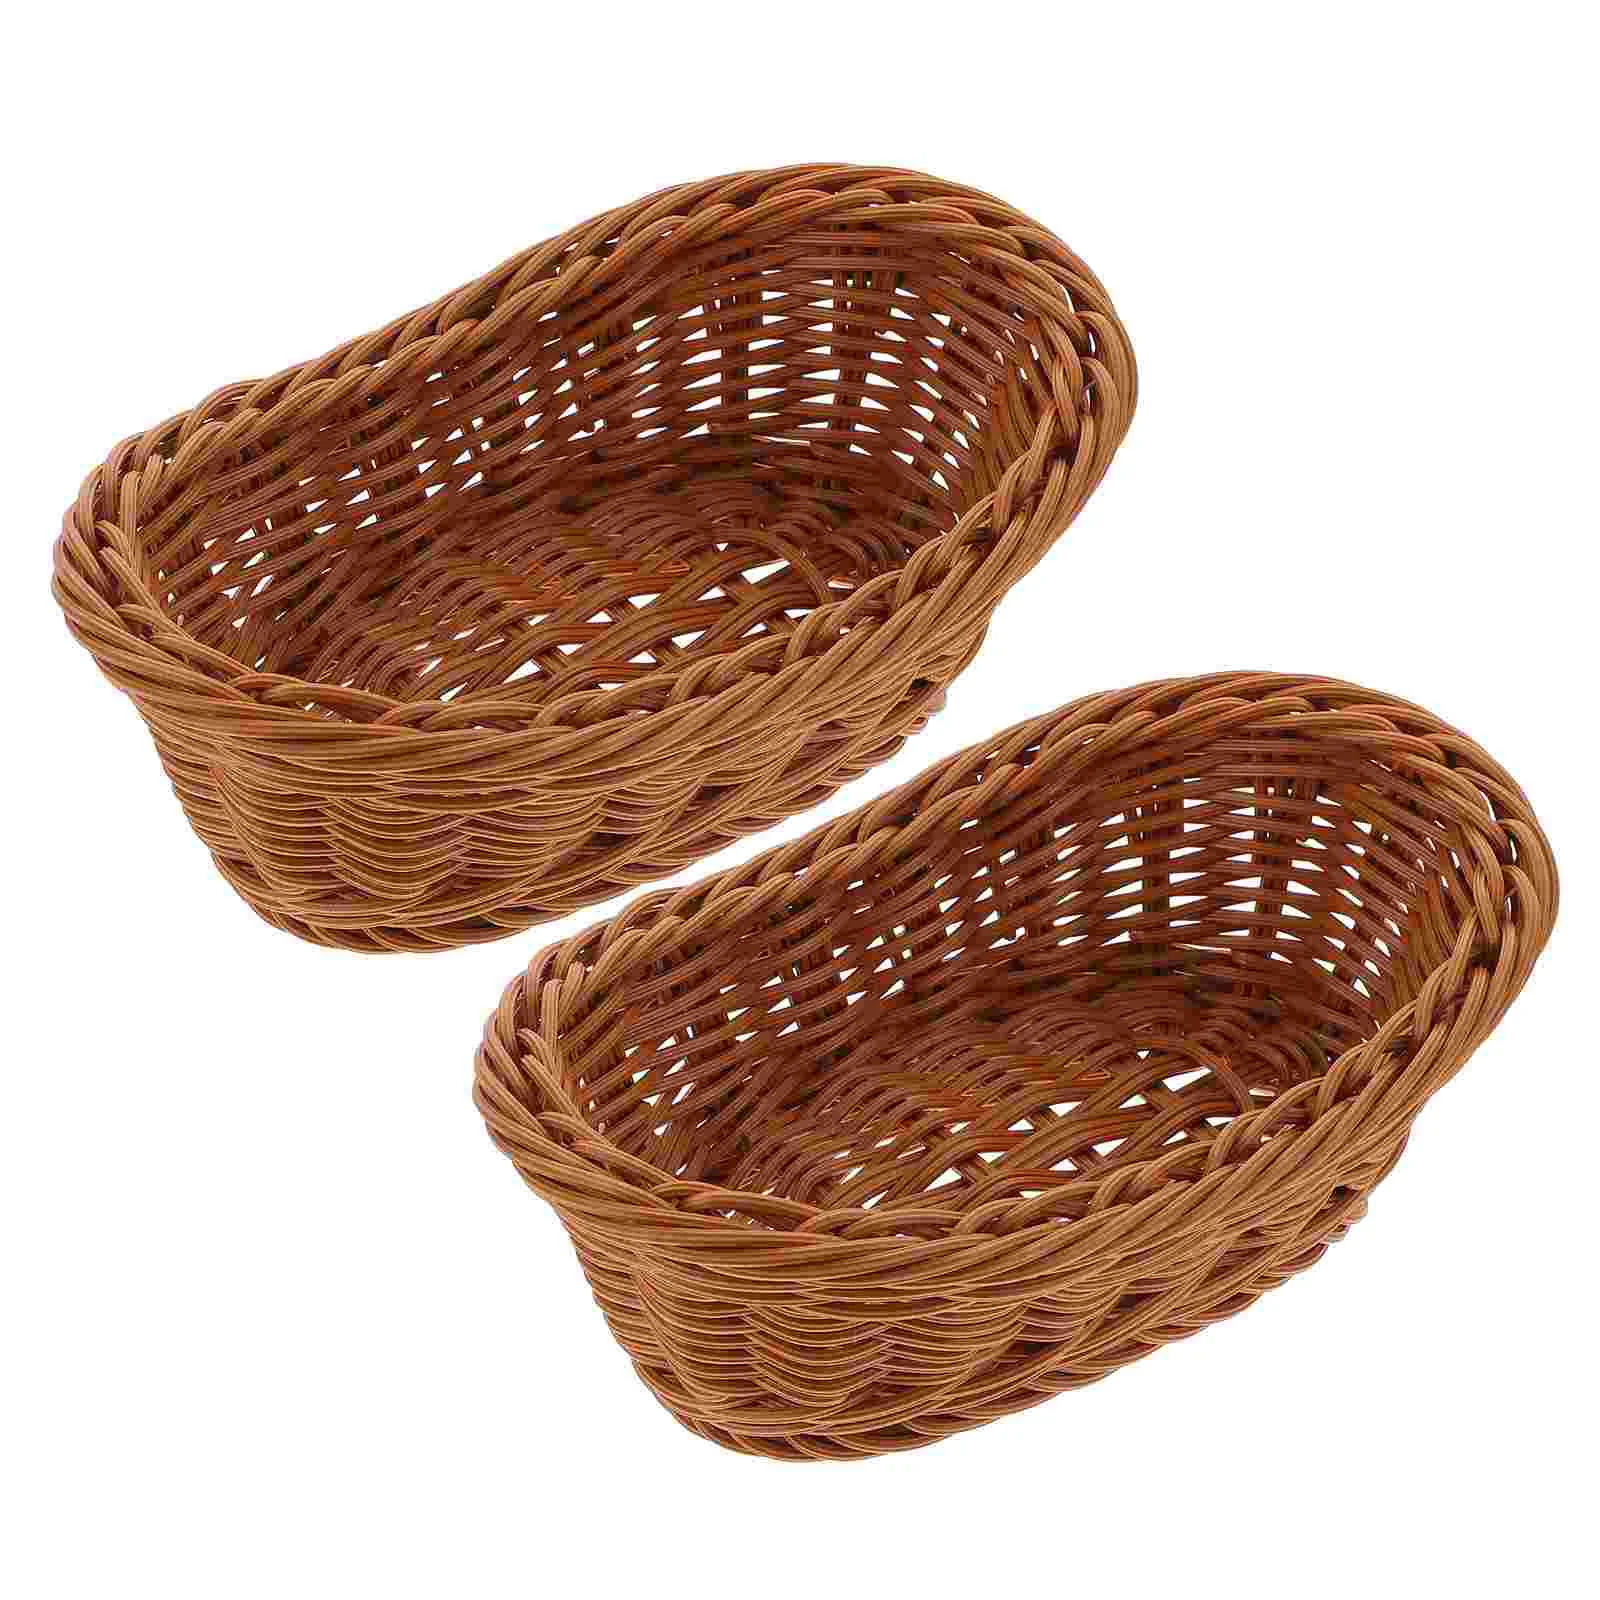 

Basket Bread Wicker Serving Woven Baskets Fruitrattan Oval Tray Storage Sushiplate Bowl Poly Snack Holder Platter Desktop Wooden